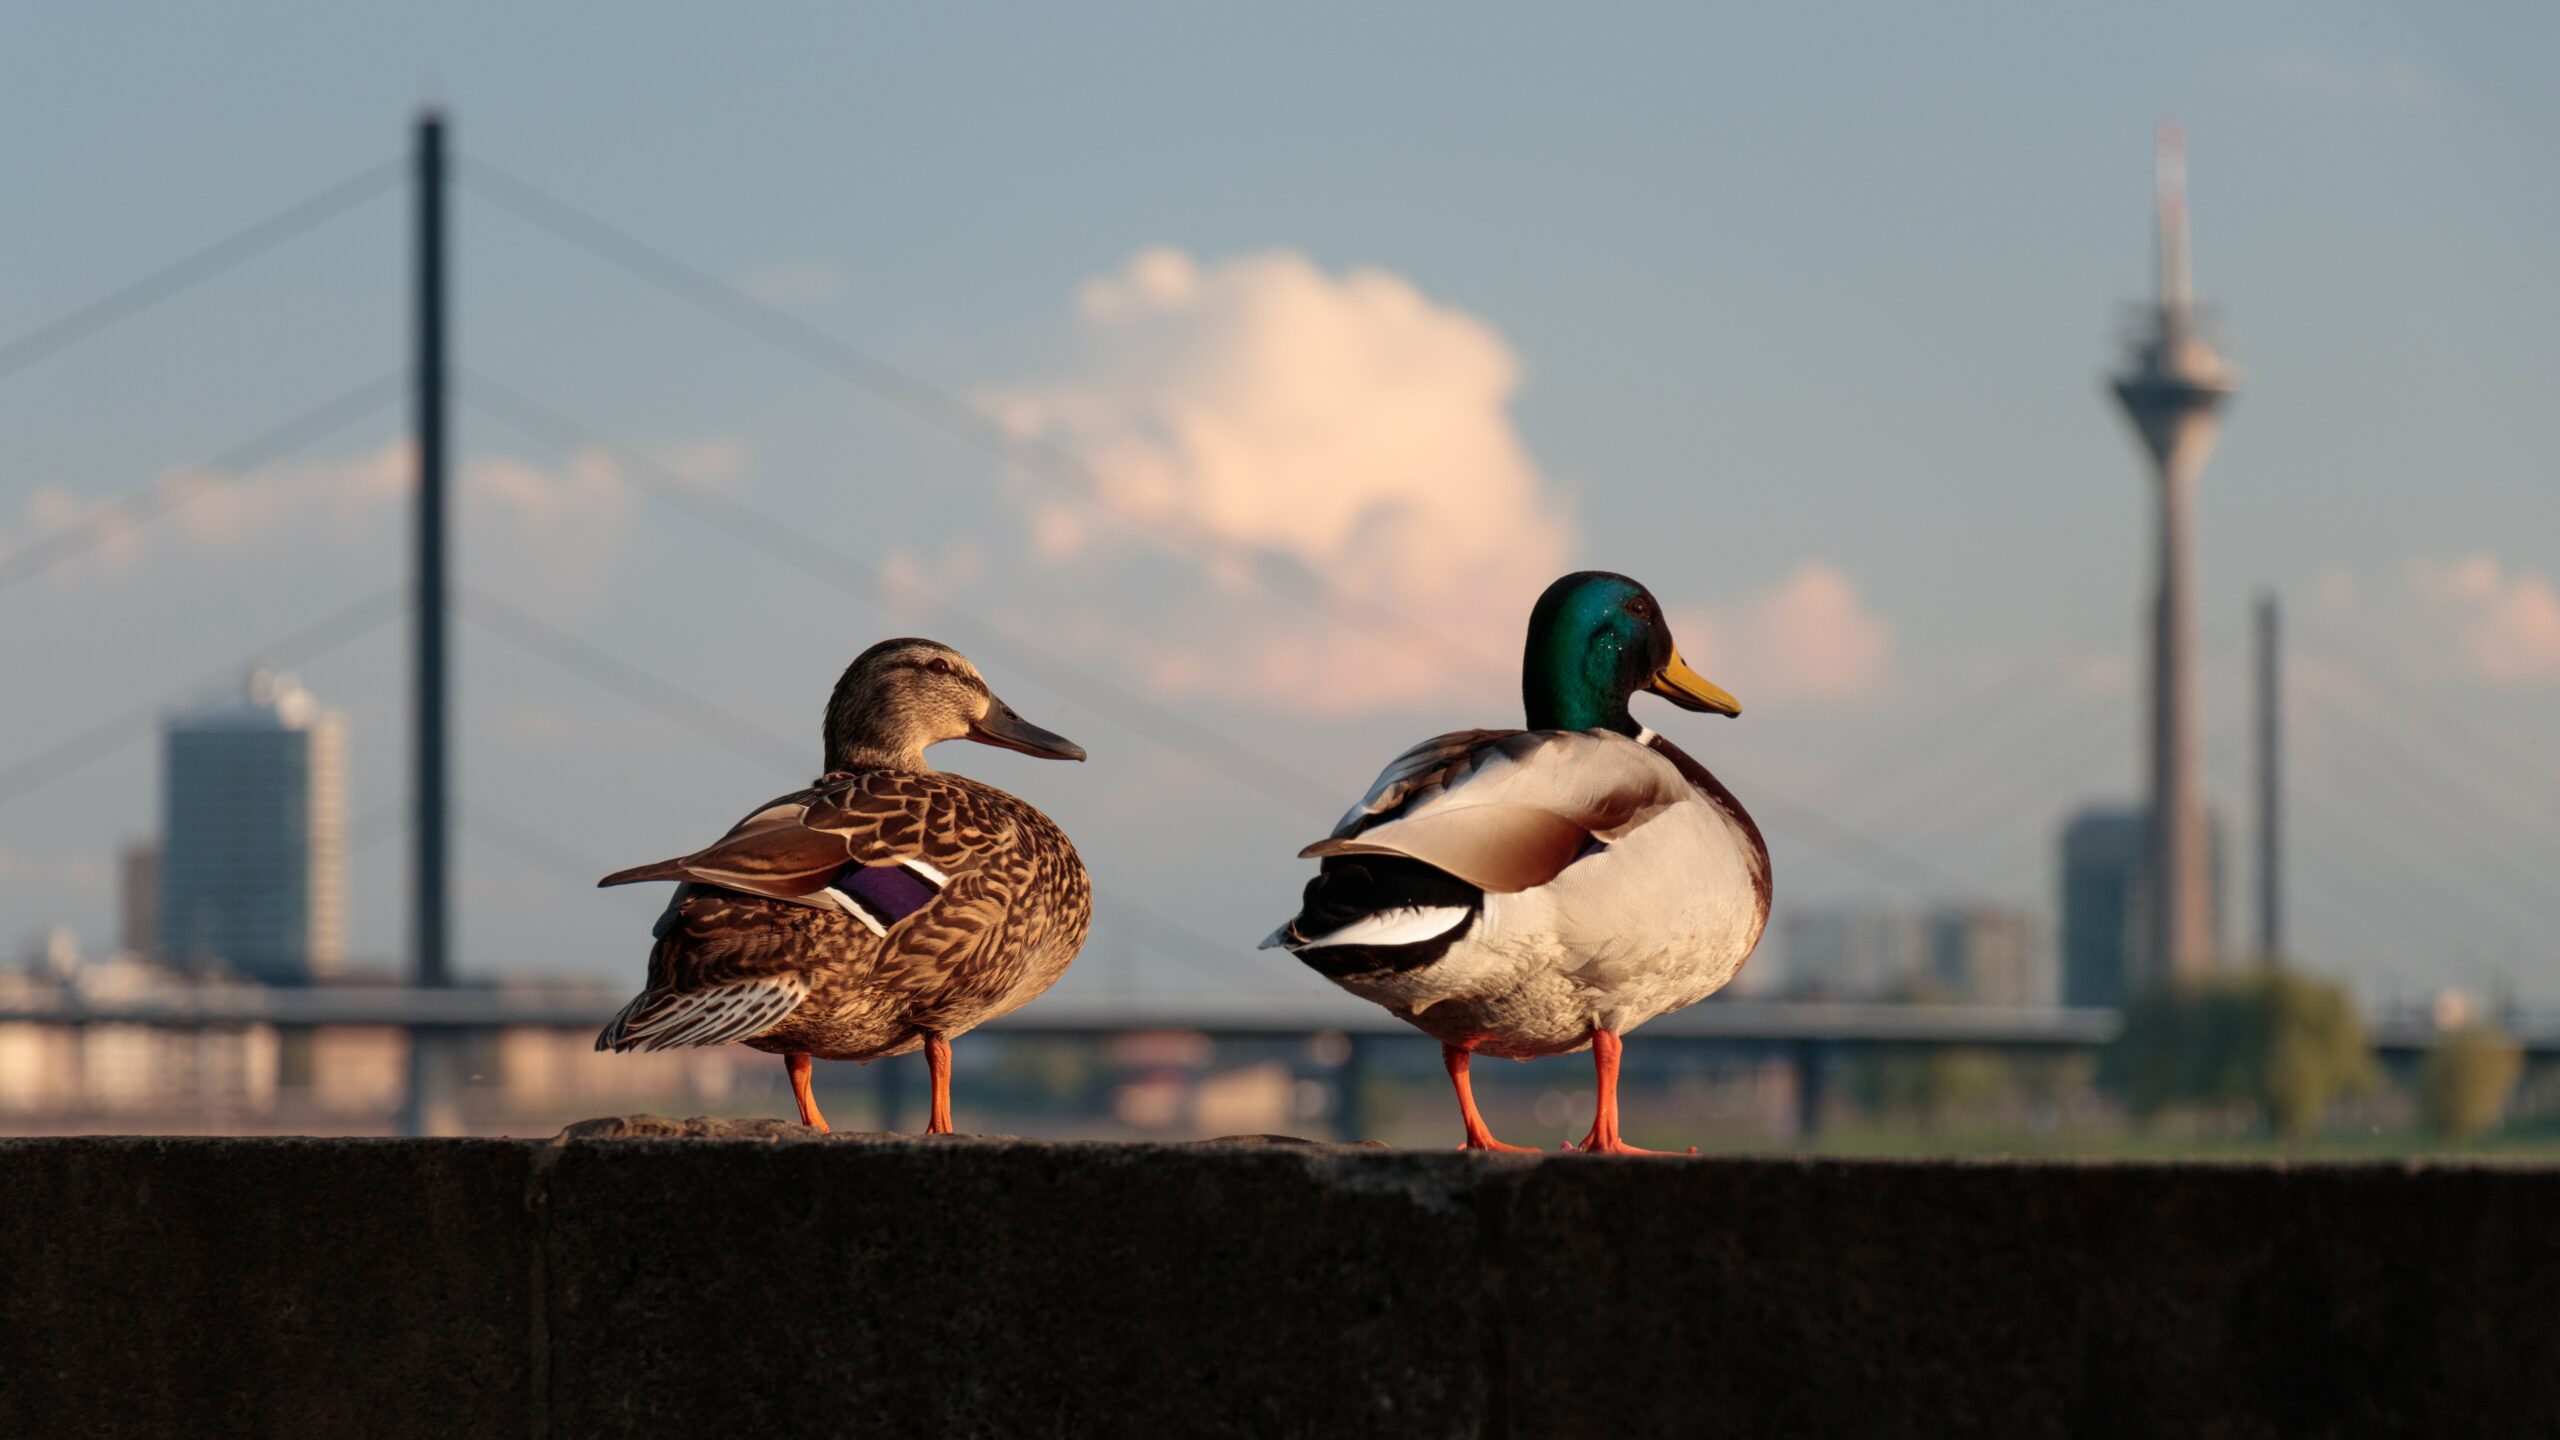 A mallard hen and drake perched on a concrete embankment near a city.